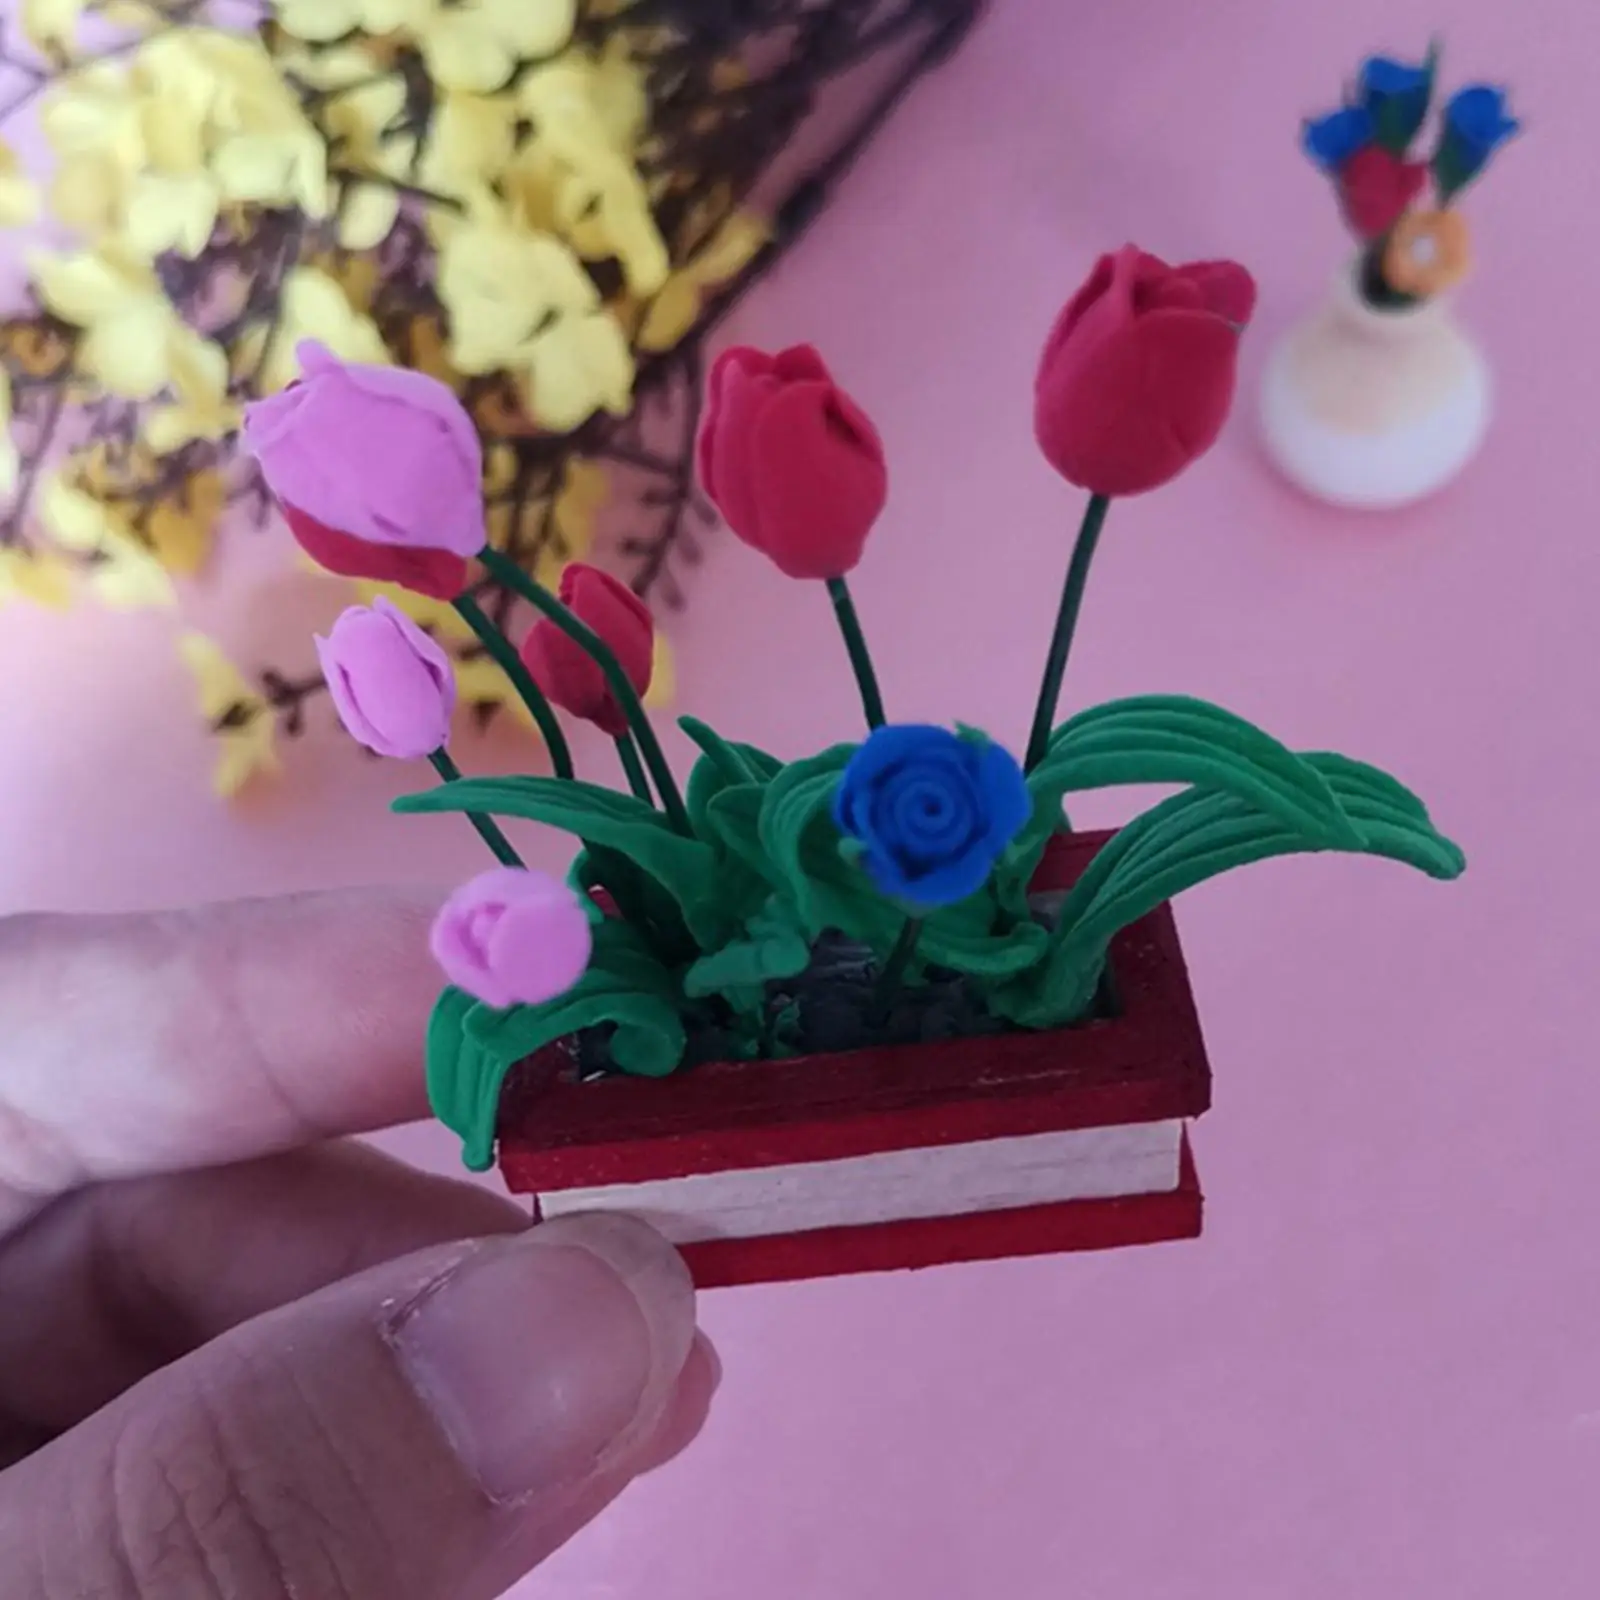 Dollhouse Miniature Flowers Scenery Supplies Greenery Ornament Mini Vase Dollhouse Flower for Diorama Micro Landscape Decoration